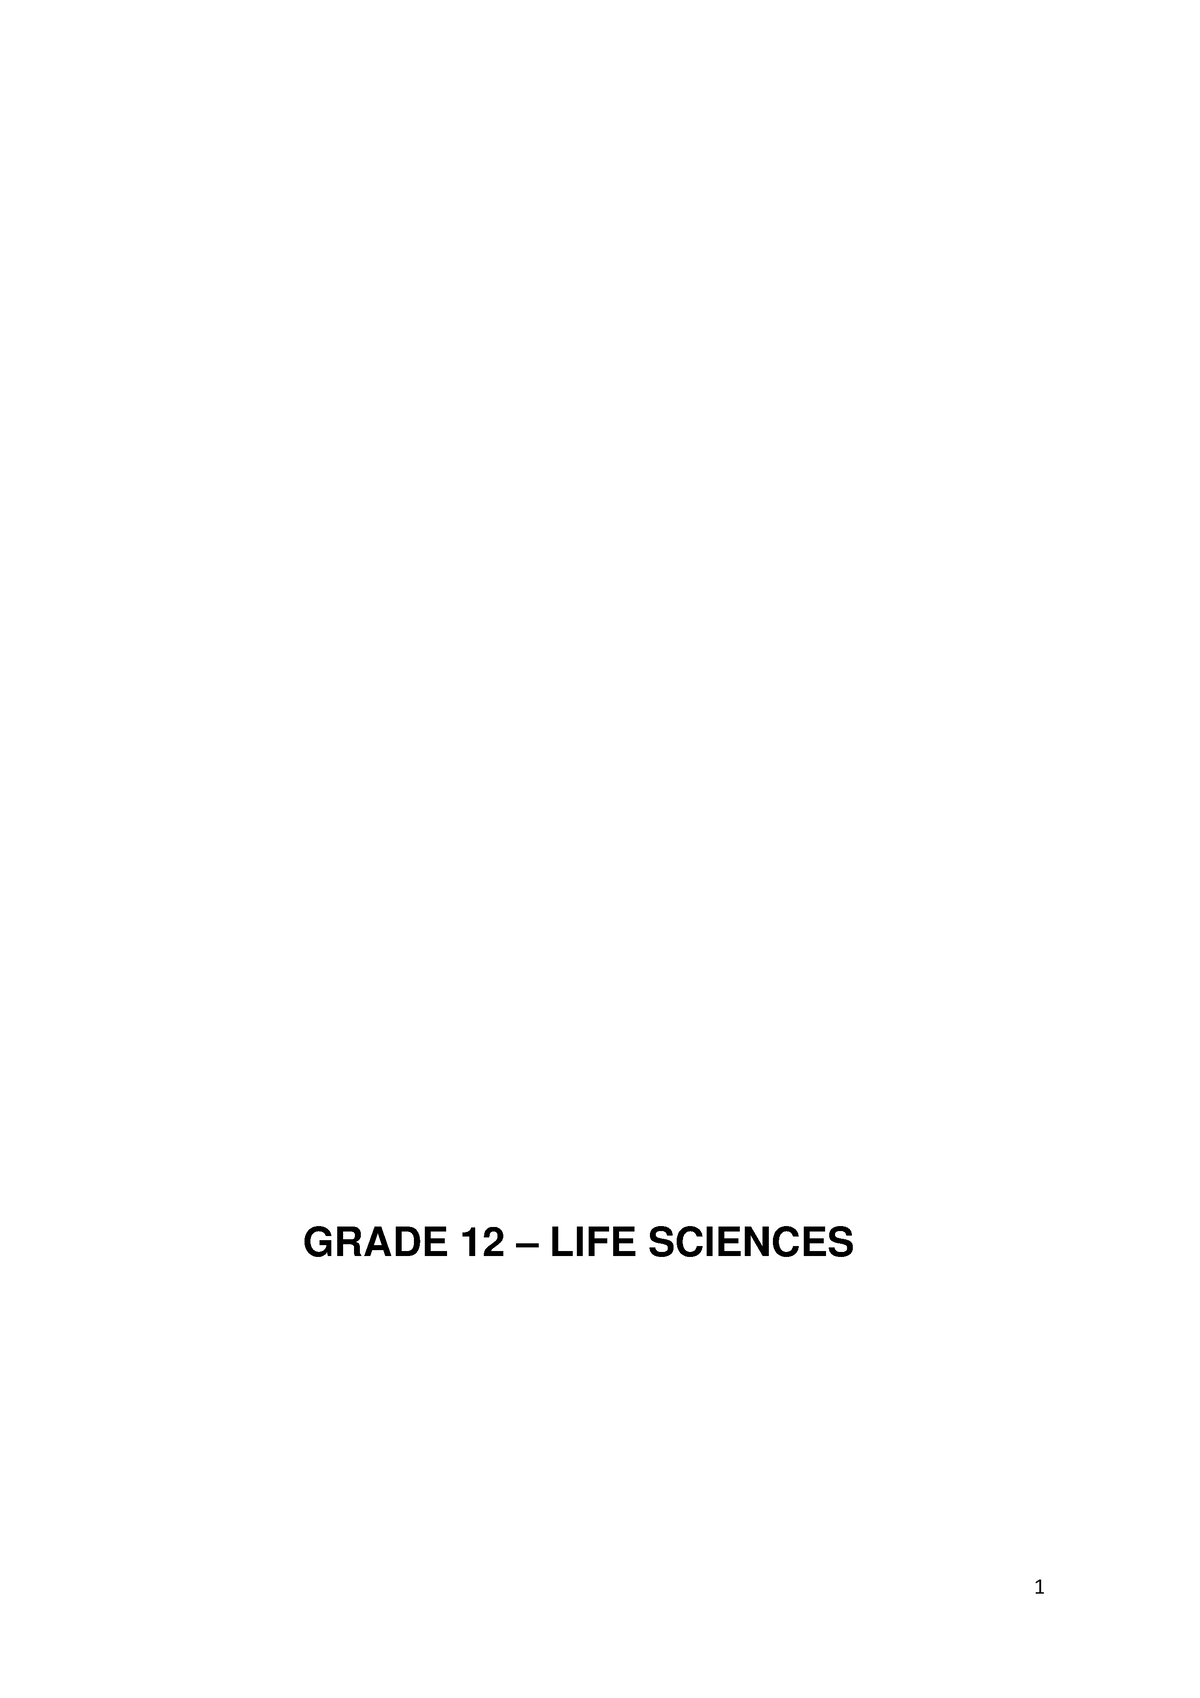 life science grade 12 assignment homeostasis